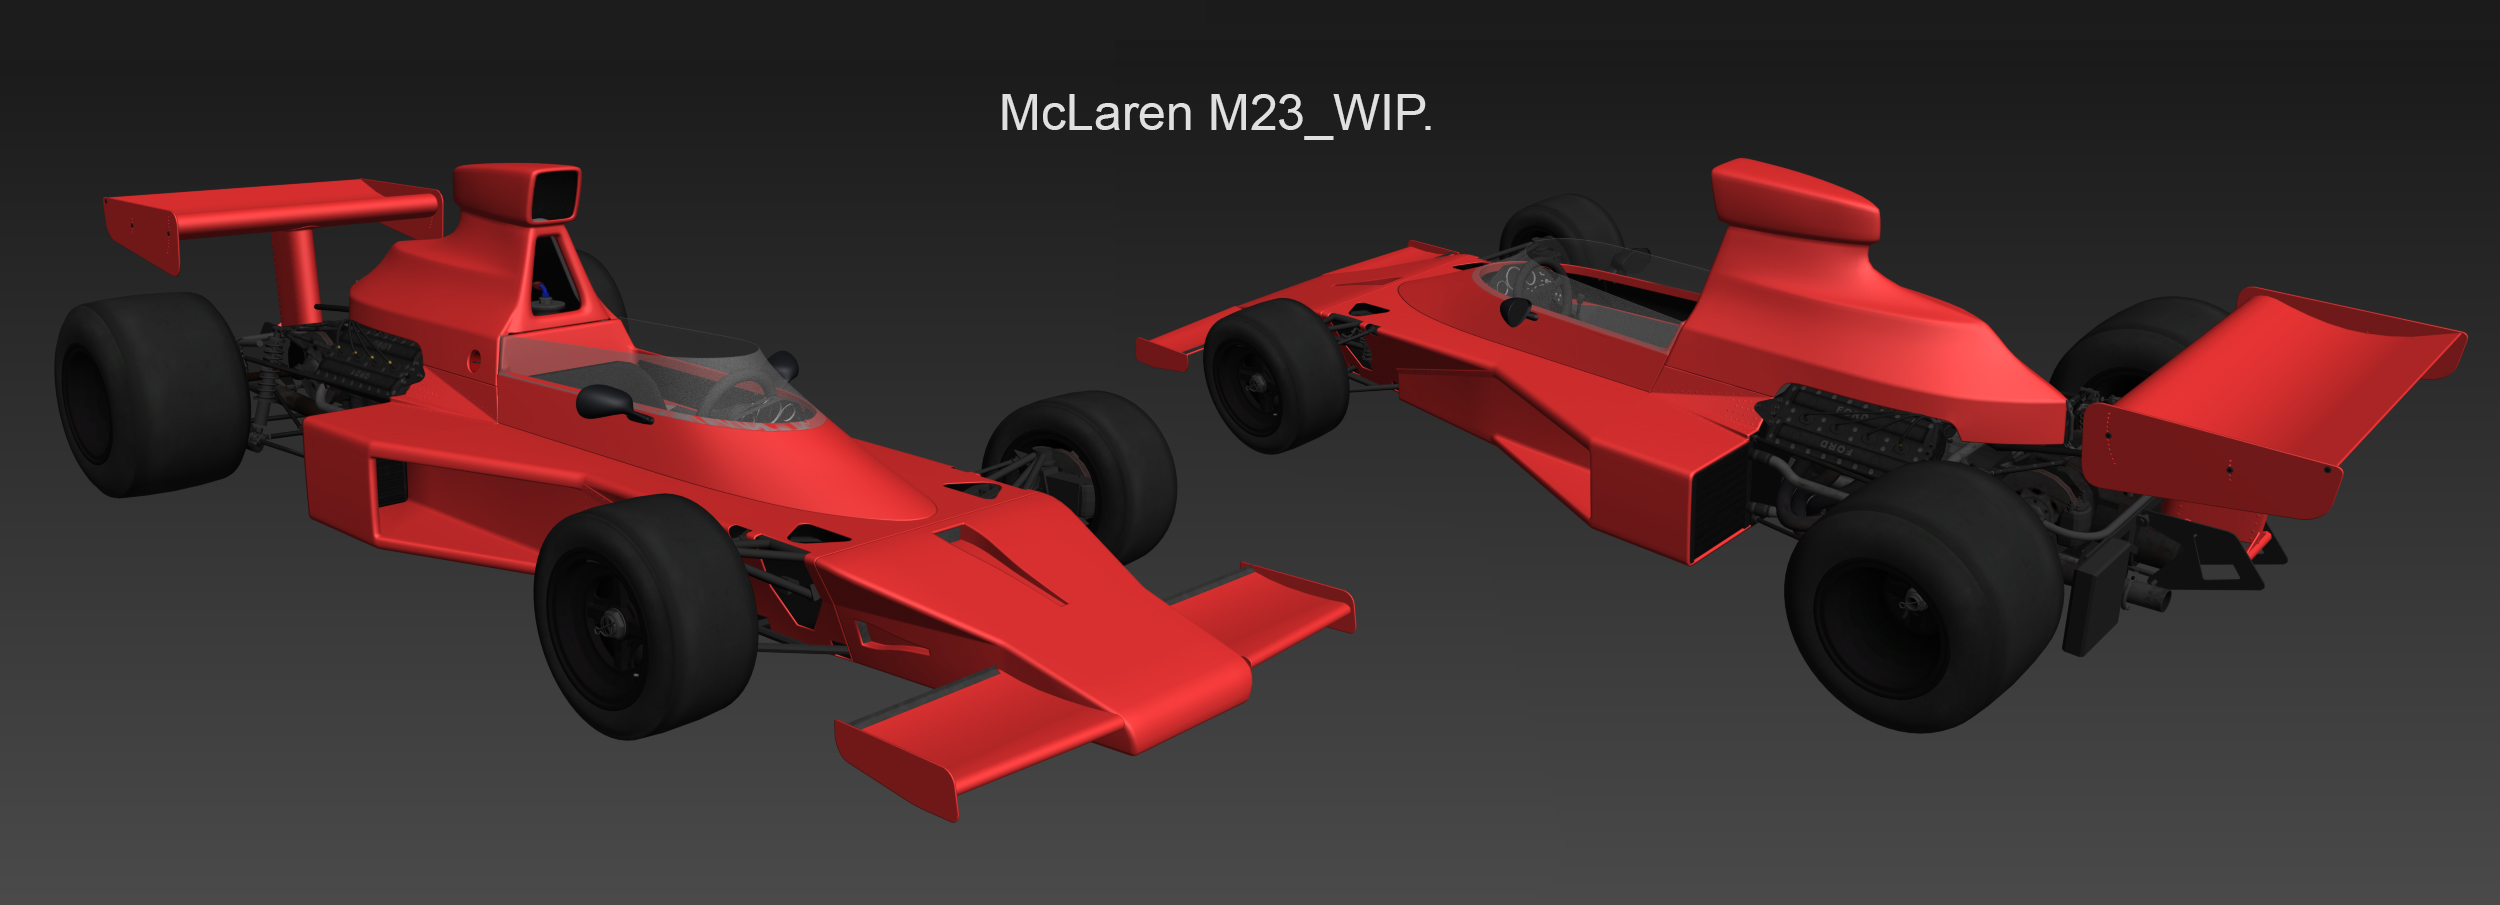 McLarenM23_WIP.jpg